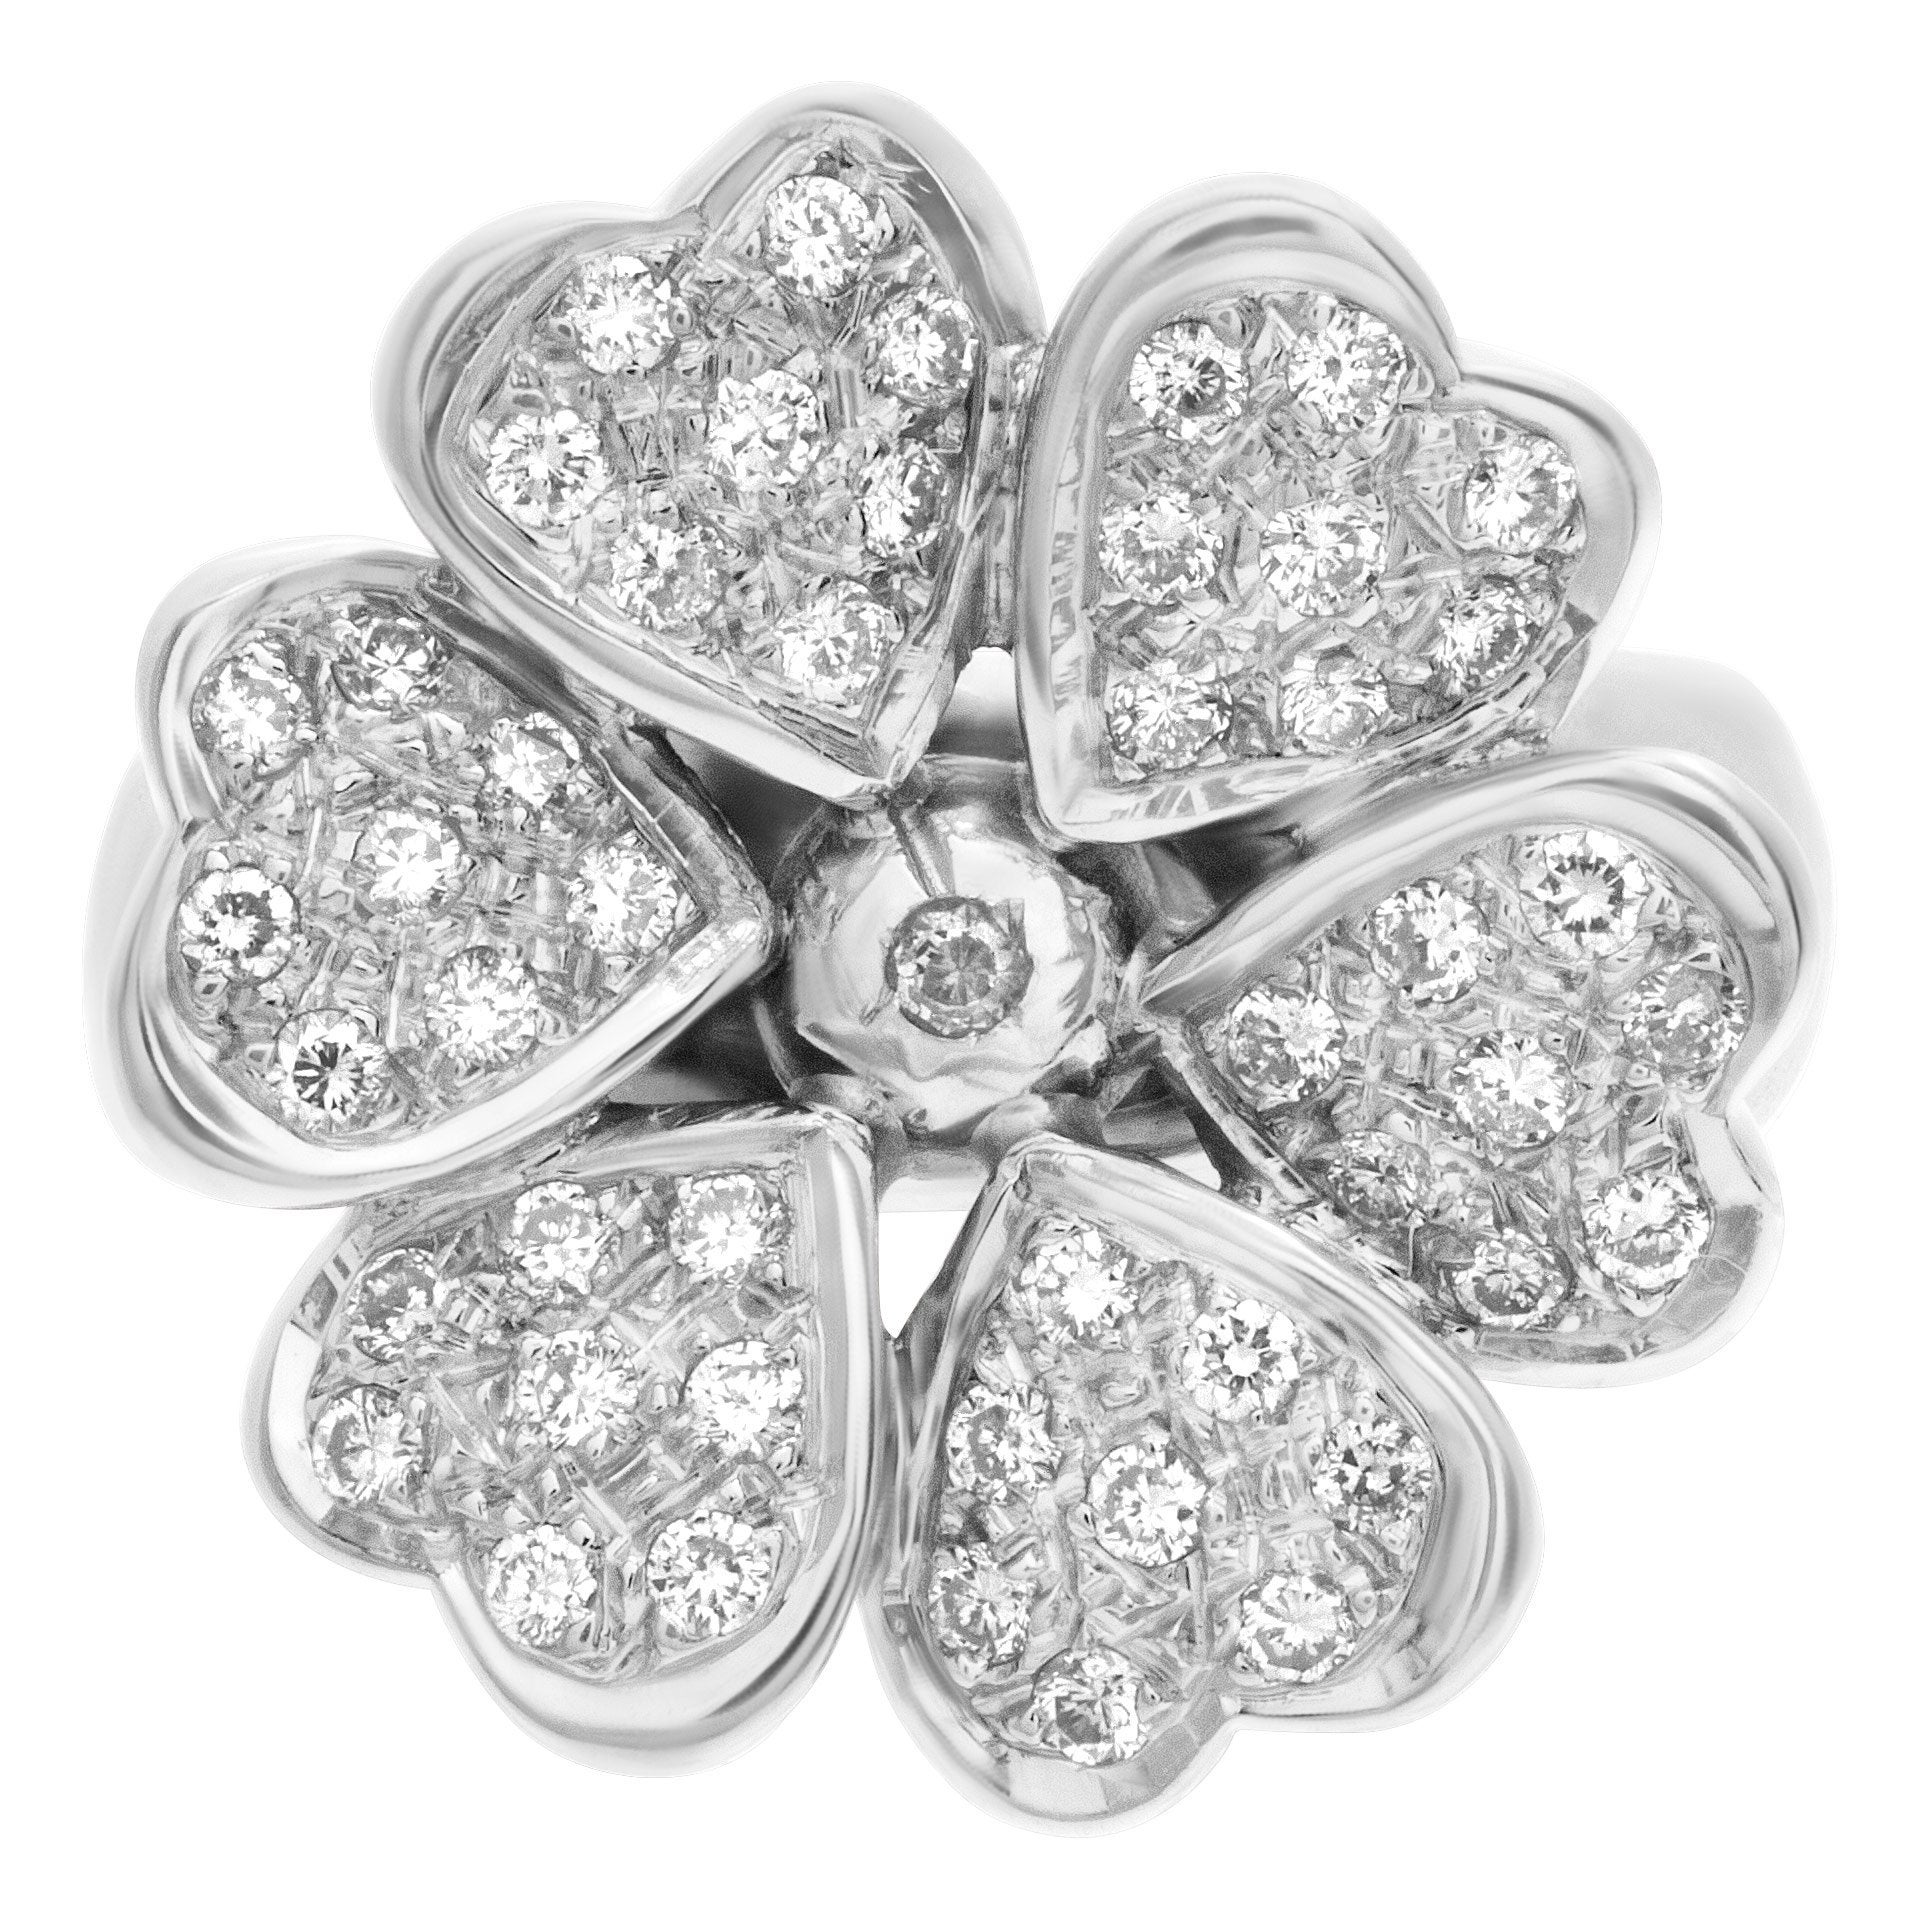 Diamond Flower Ring with 0.60 Carat in G-H Color, VS Clarity Diamonds Set in 18k